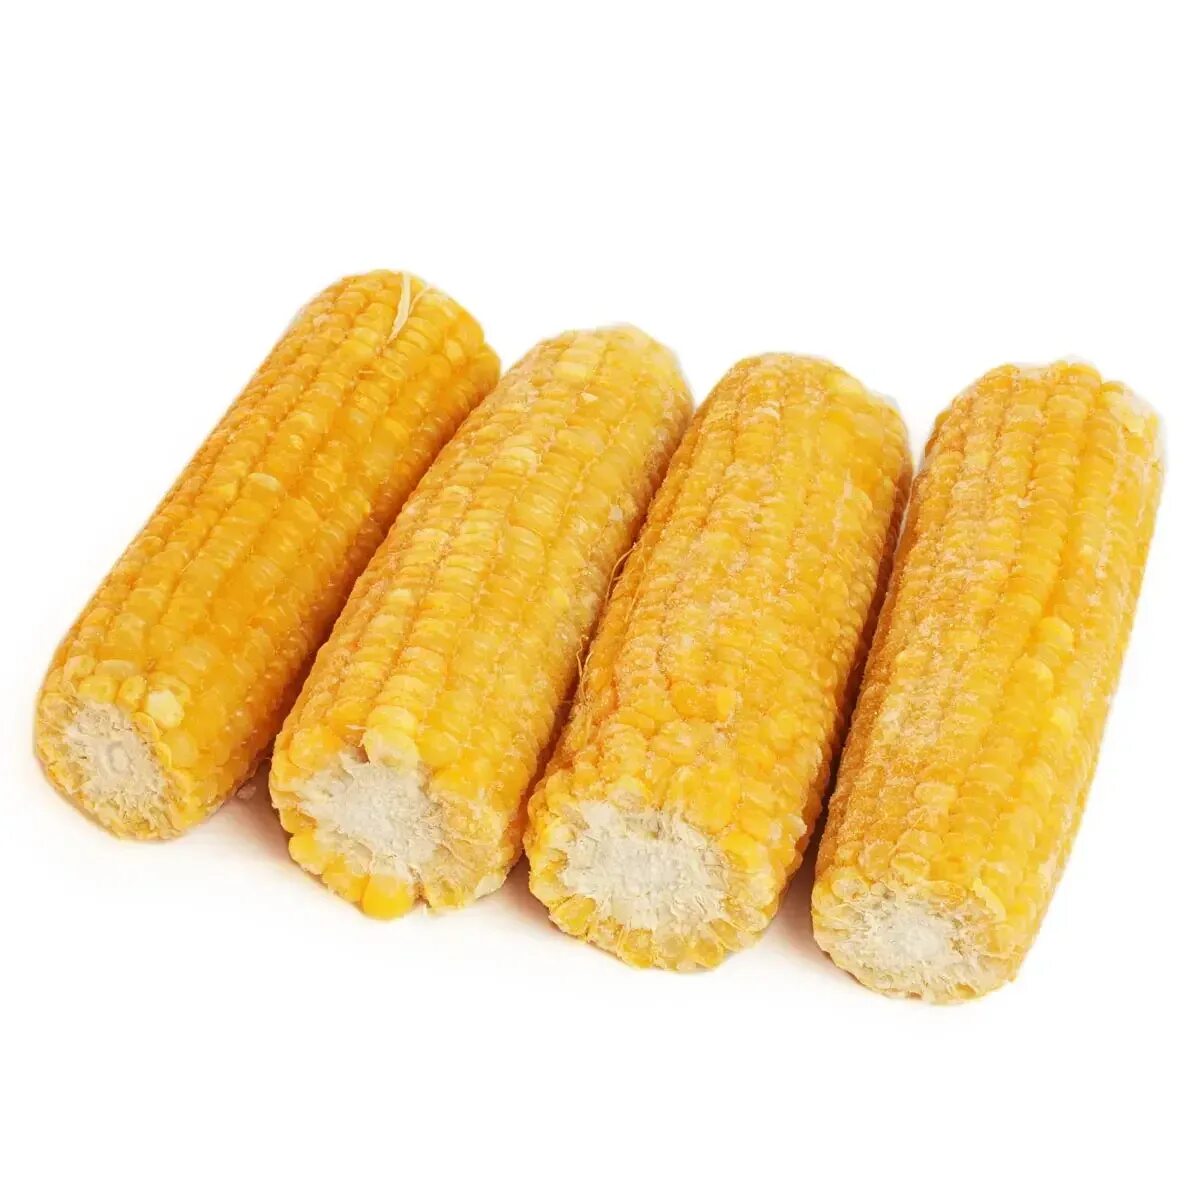 Кукуруза весовая початки. Кукуруза в початках замороженная. Кукуруза в початках заморозка. Кукуруза мороженная в початках.